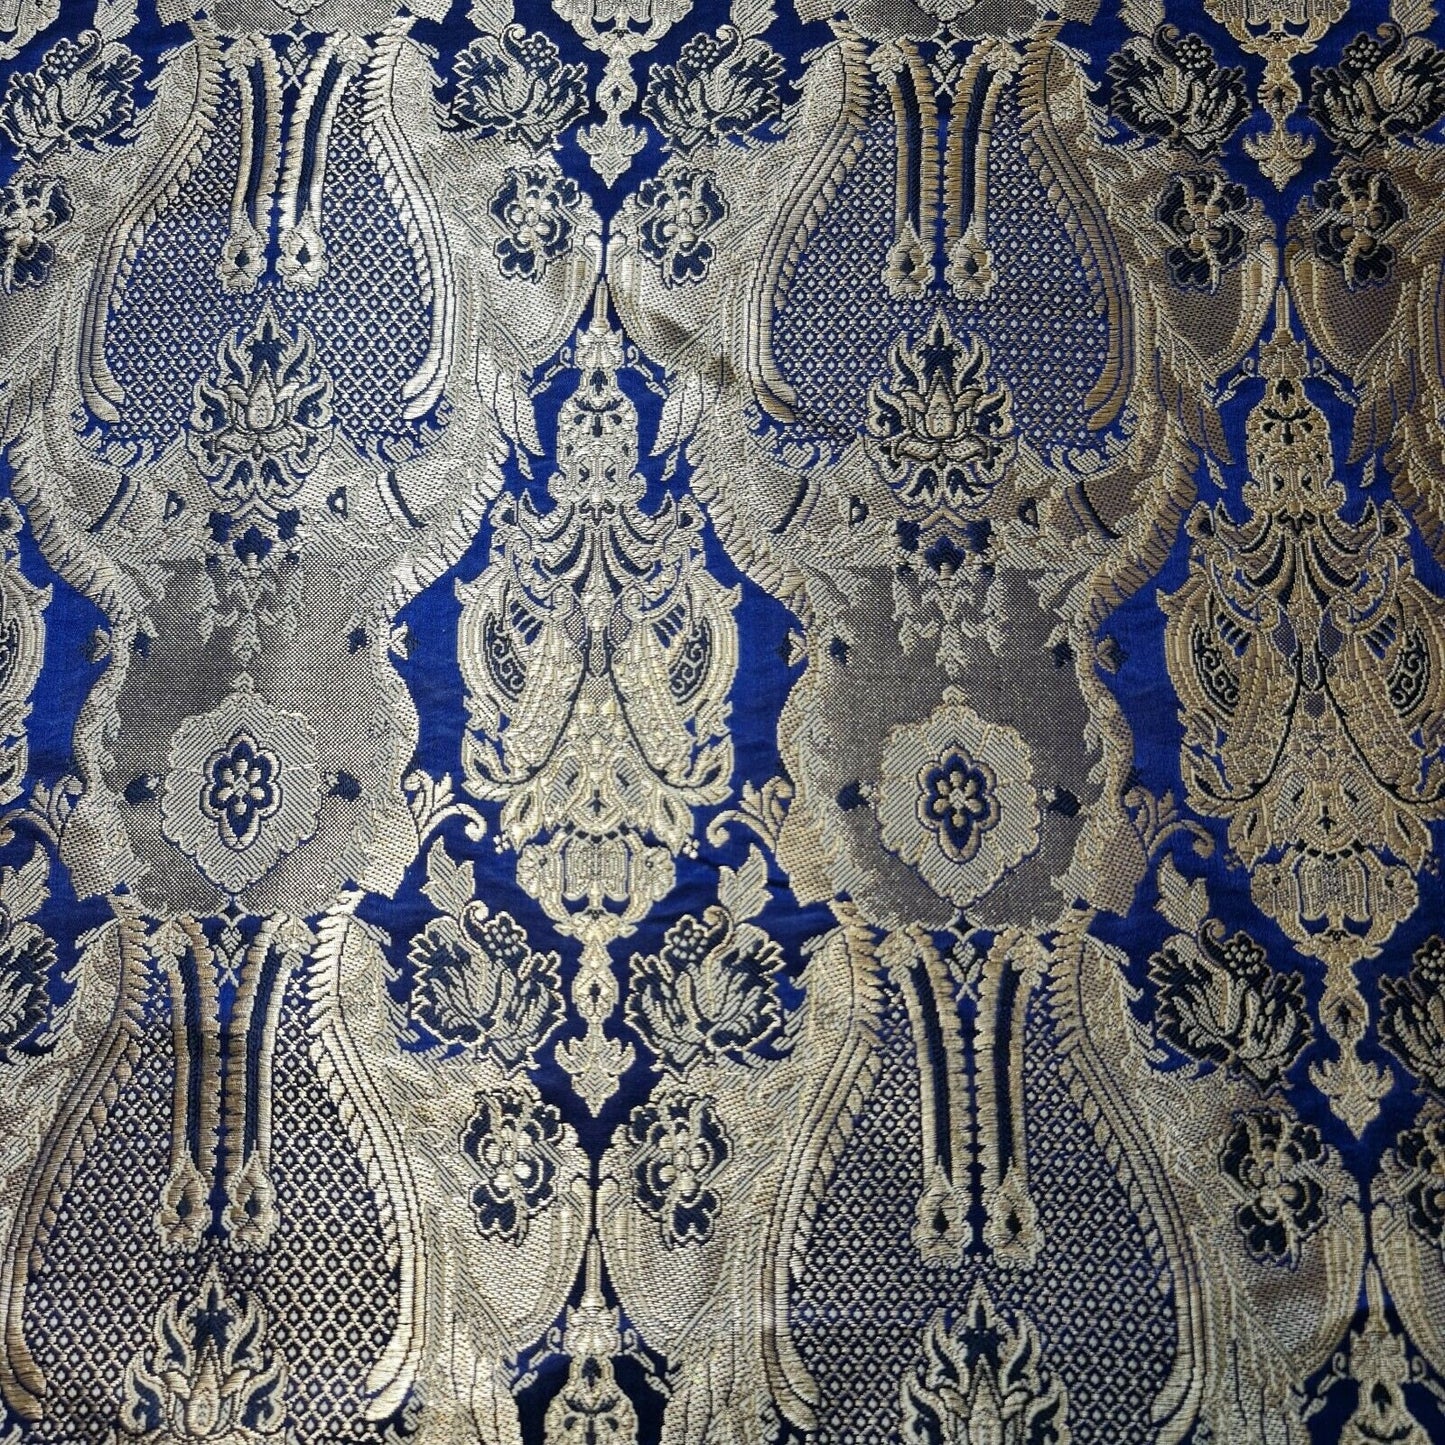 Ornamental Damask Premium Gold Metallic Indian Banarasi Brocade Fabric 44" Meter (NAVY BLUE)